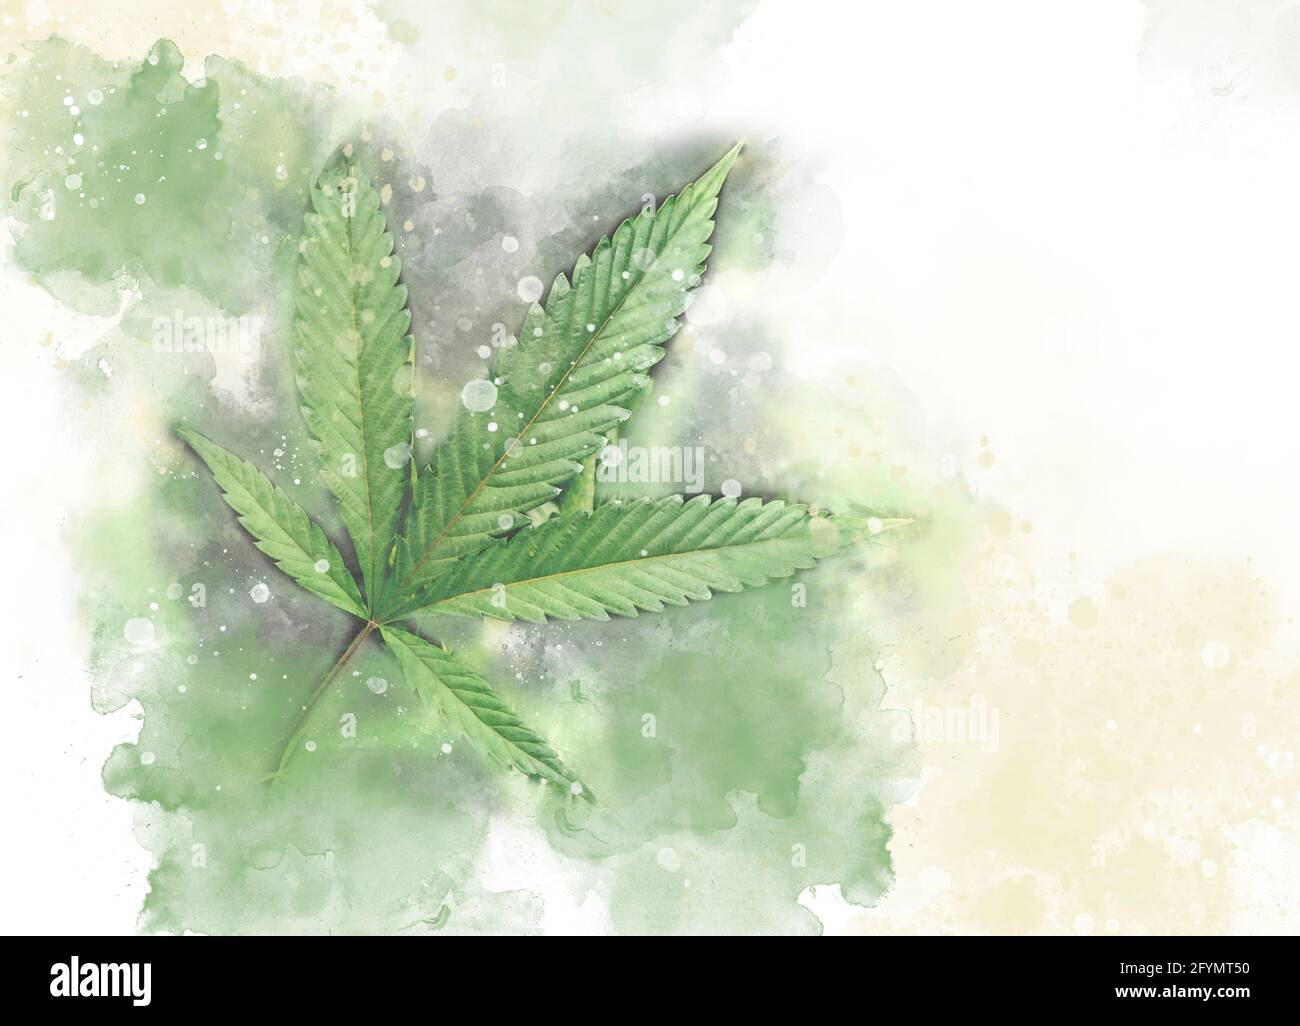 Cannabis leaf, illustration Stock Photo